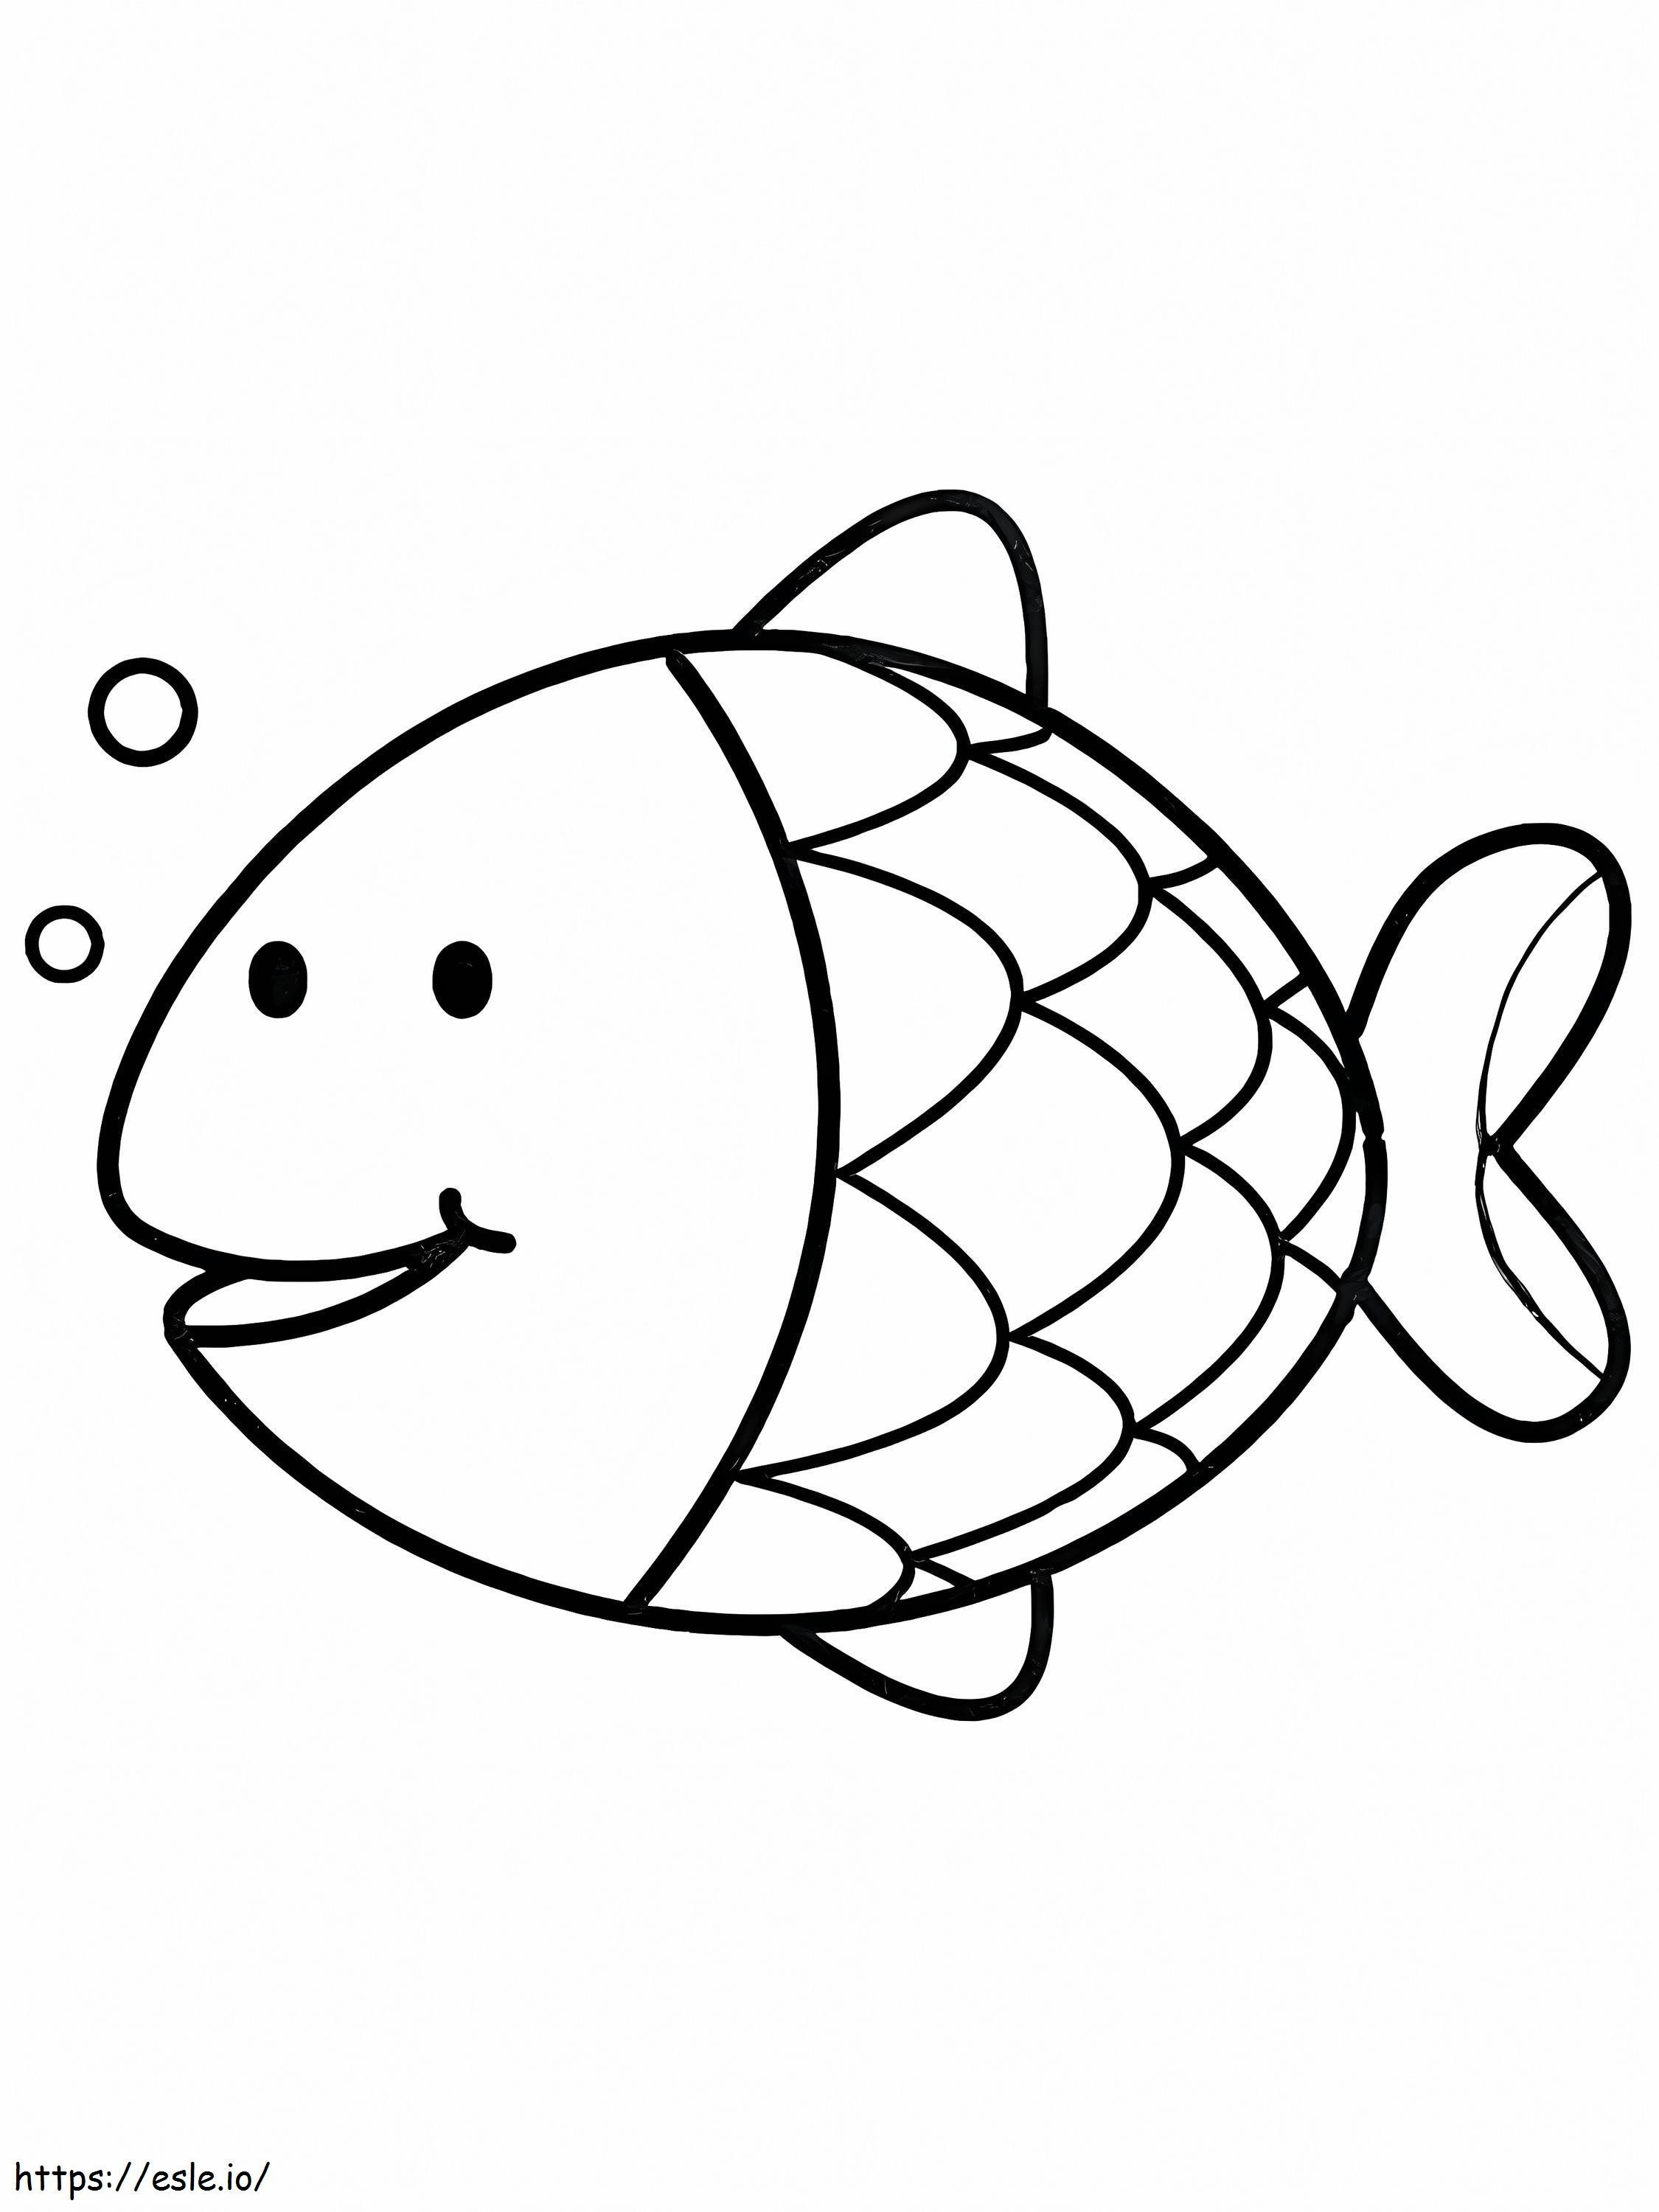 Podstawowa ryba kolorowanka